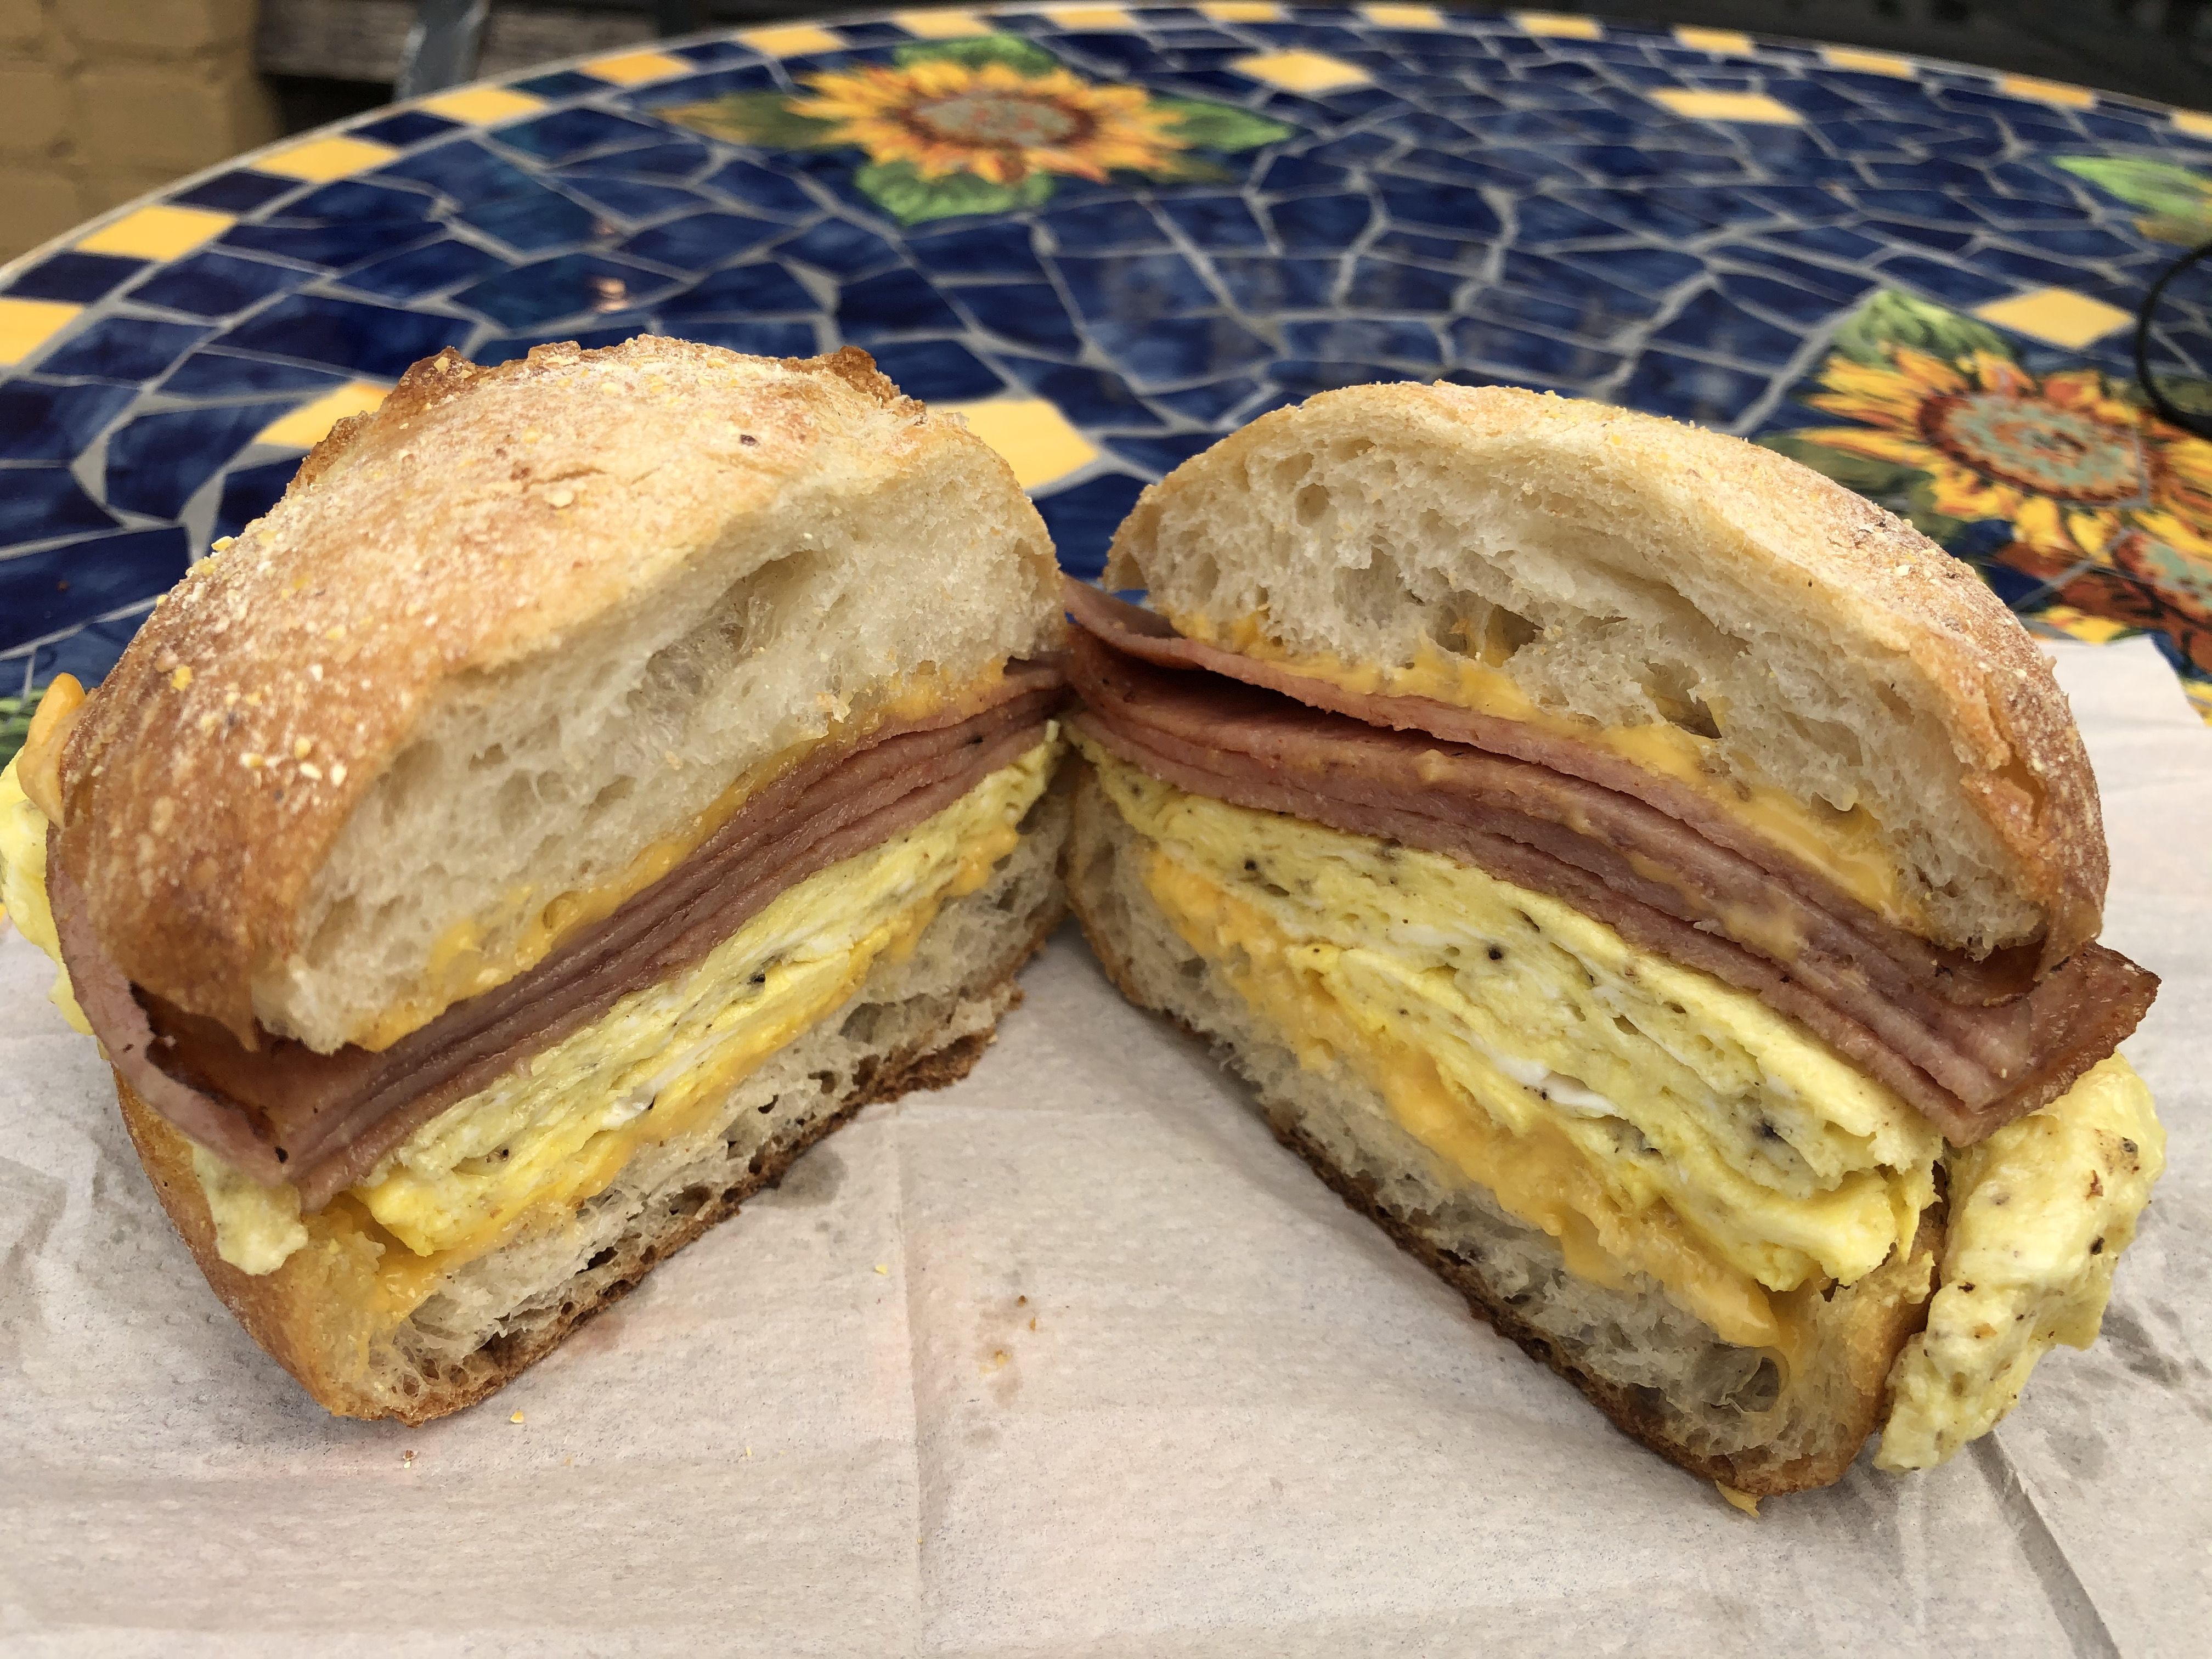 Meget Arashigaoka Implement This is the best Taylor ham/pork roll sandwich in N.J. - nj.com